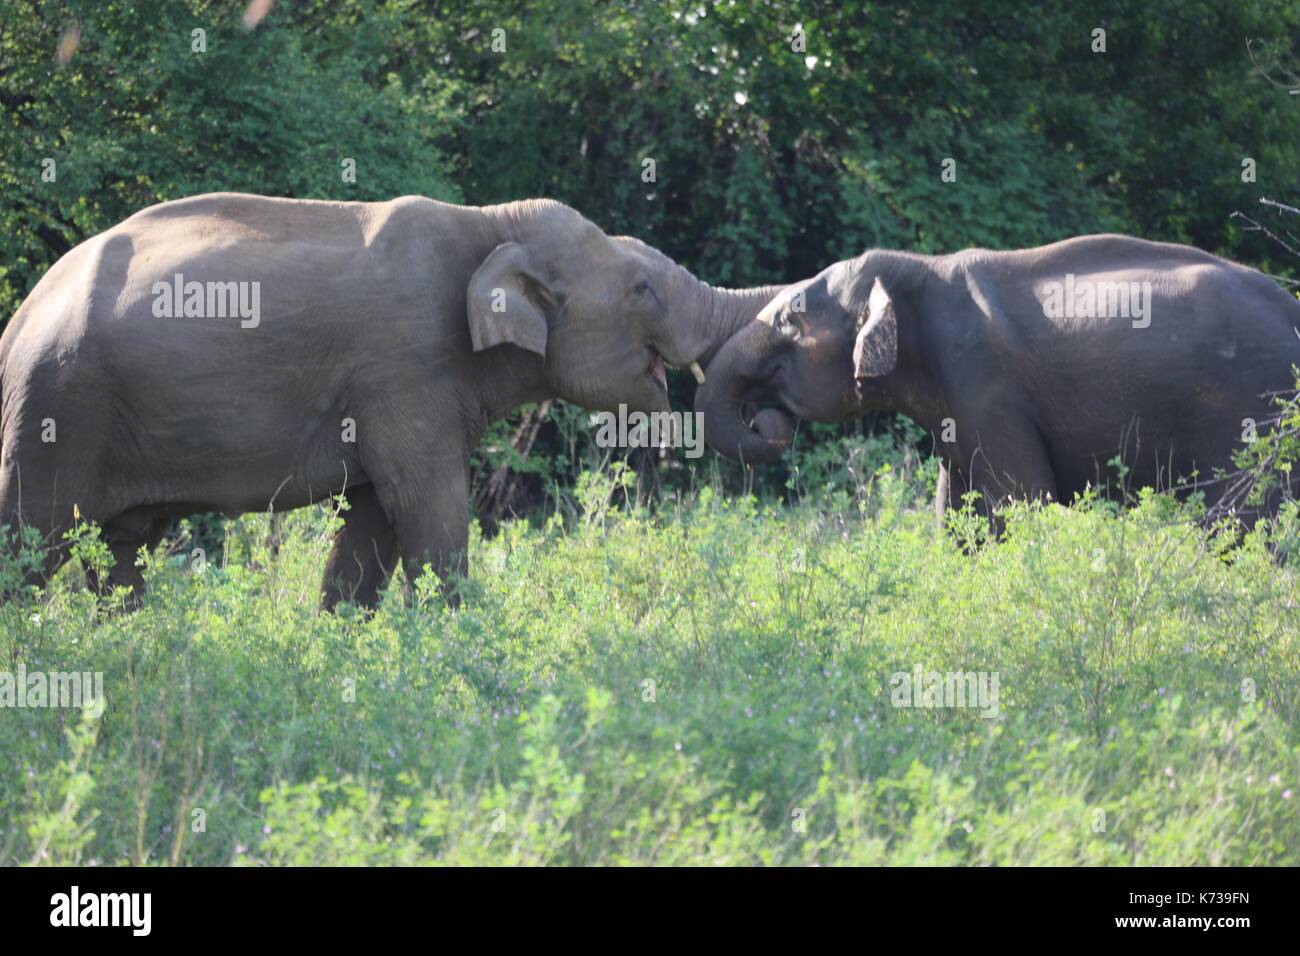 Elephants at Kaudulla National Park Stock Photo